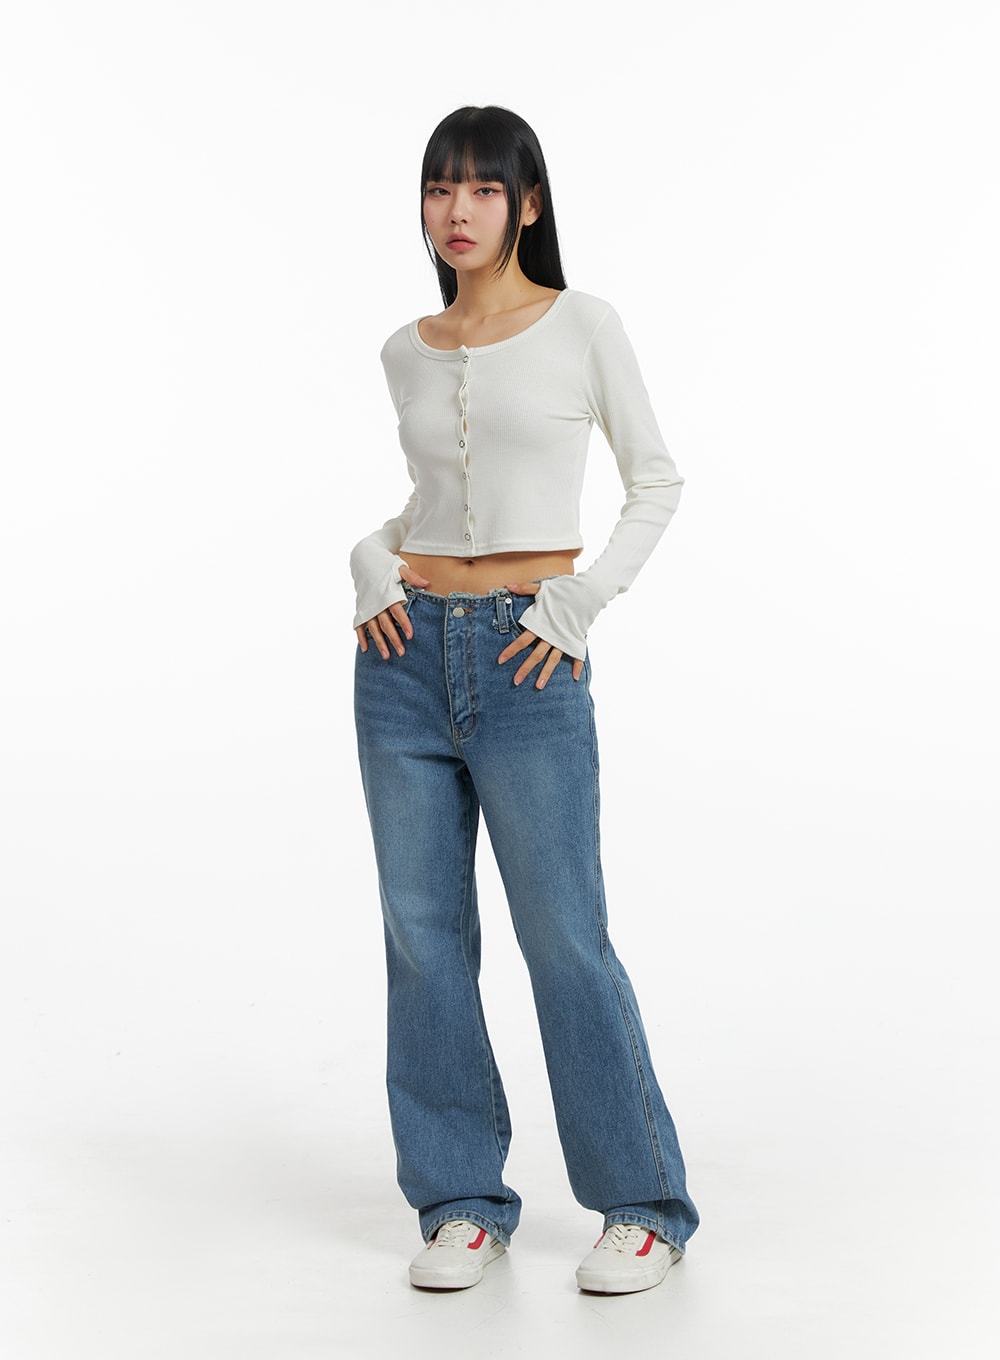 waist-distressed-flared-jeans-im414